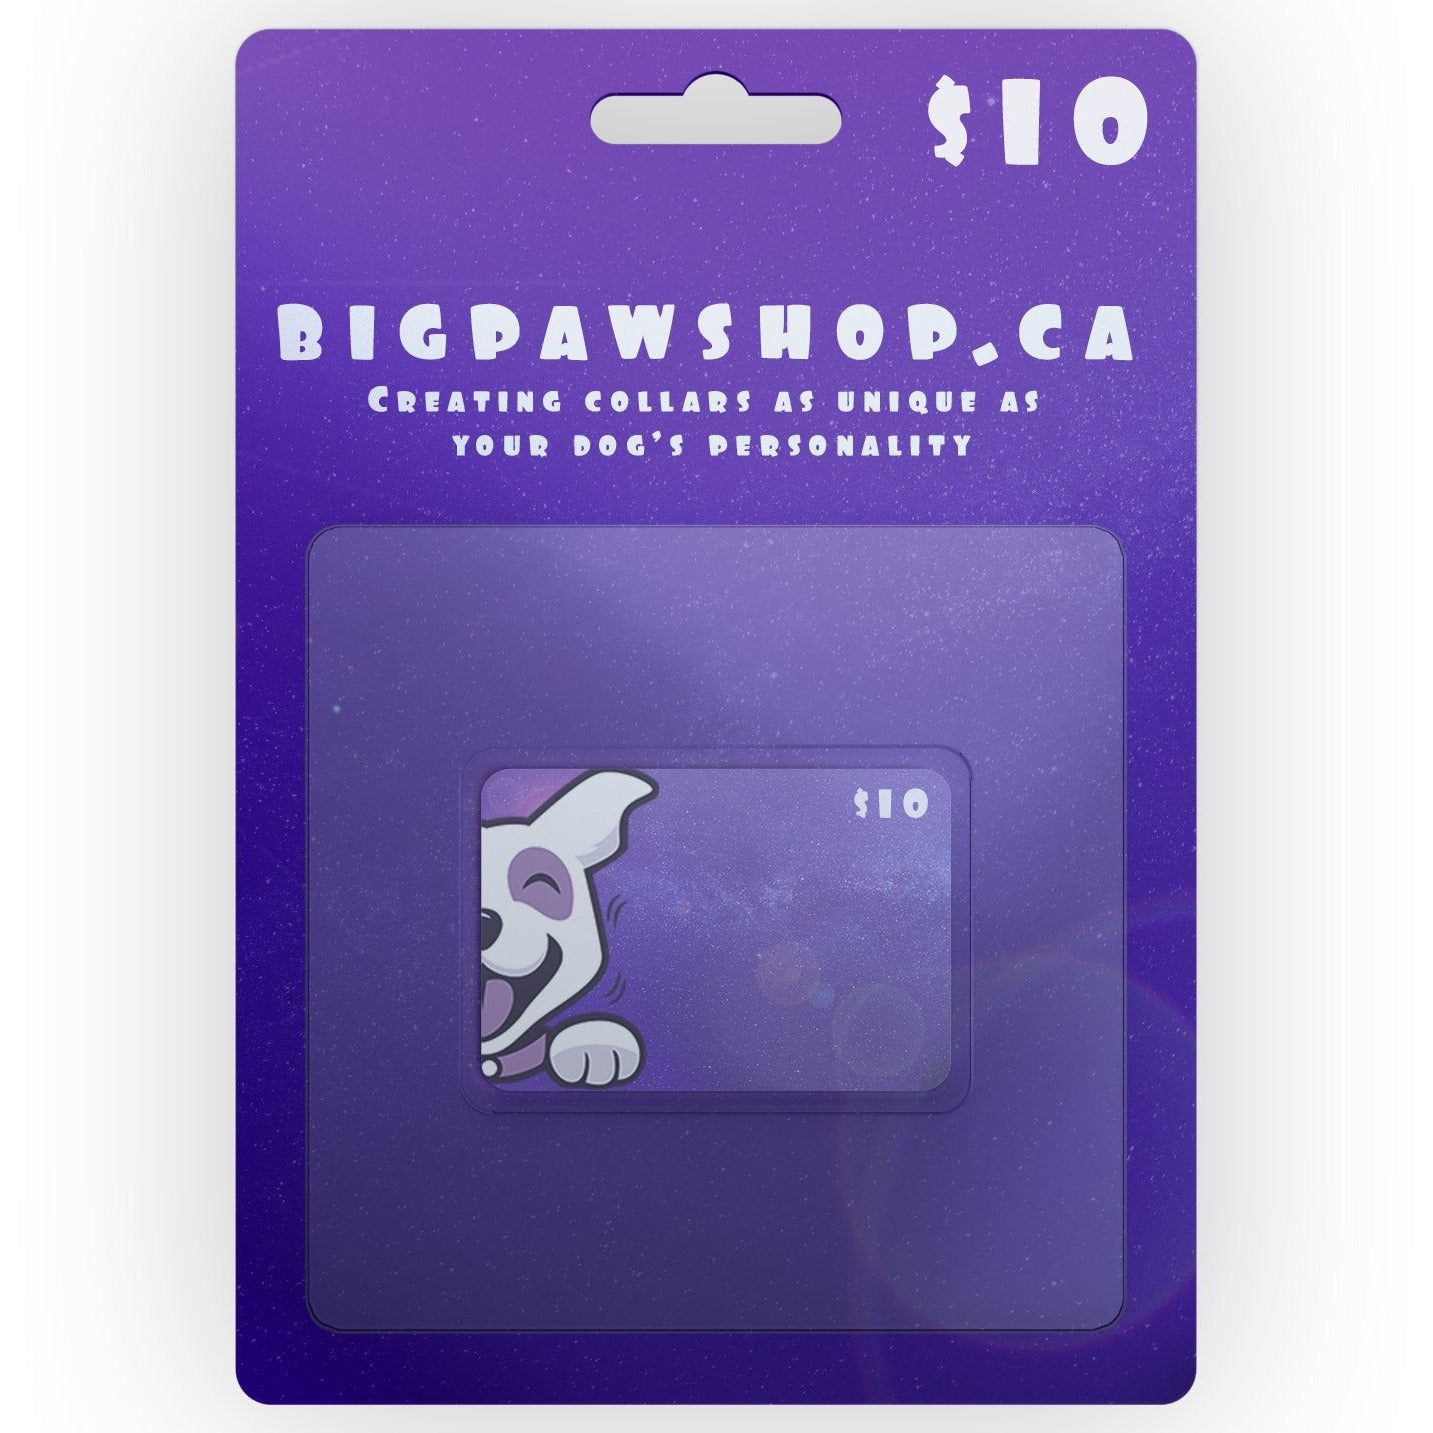 Big Paw Shop Gift Cards | BigPawShop.ca